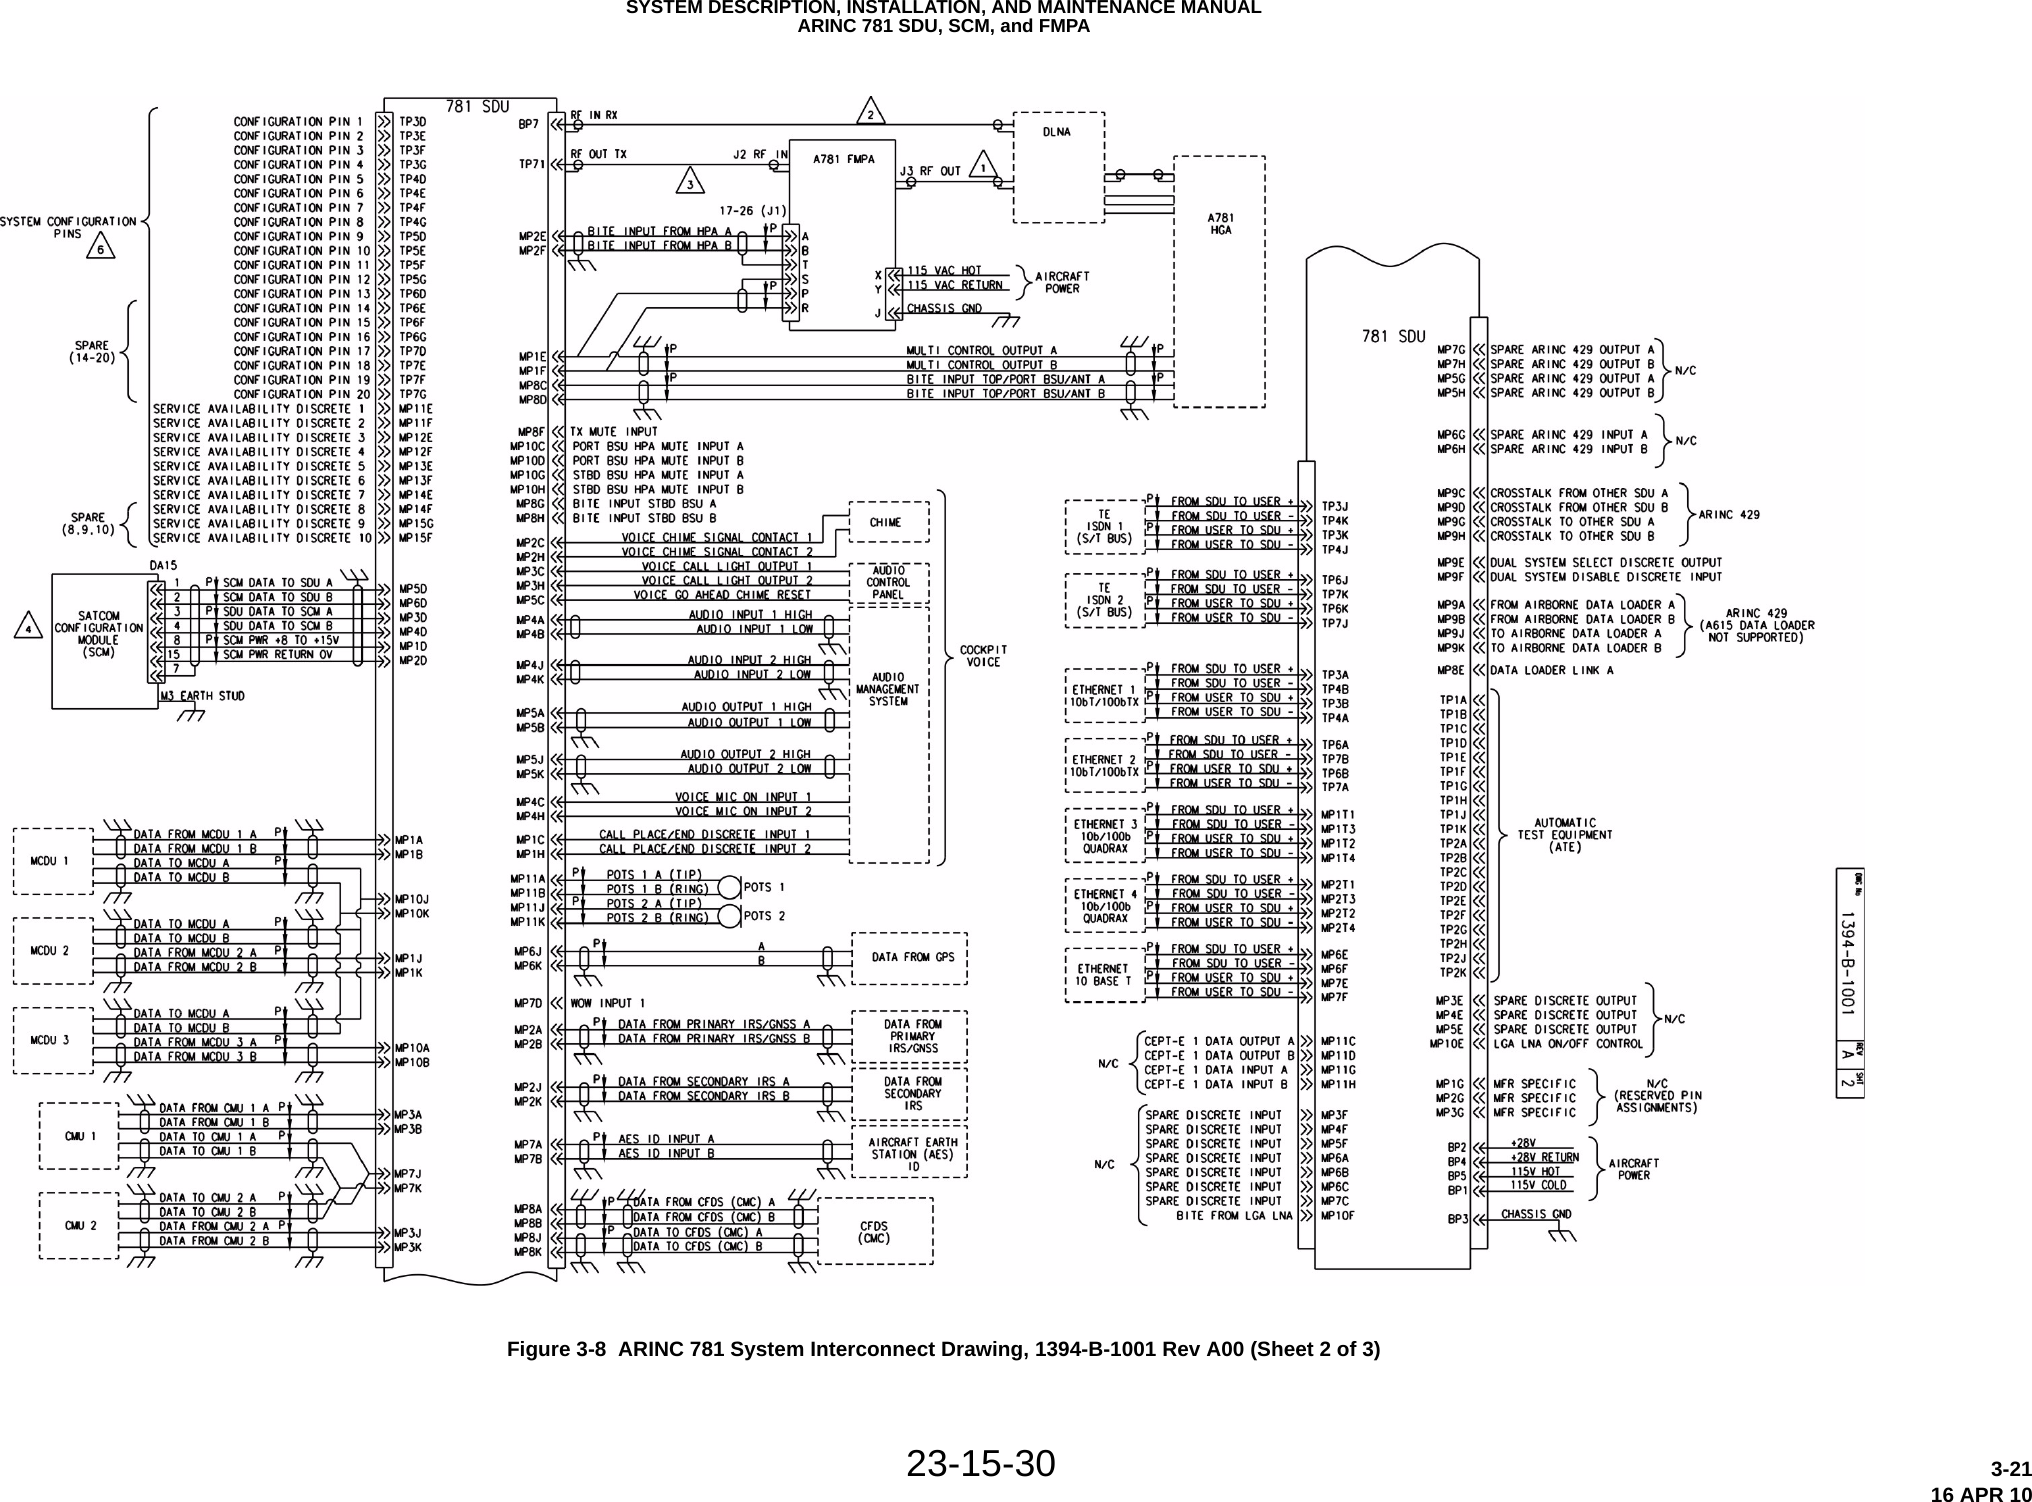 SYSTEM DESCRIPTION, INSTALLATION, AND MAINTENANCE MANUALARINC 781 SDU, SCM, and FMPA23-15-30 3-2116 APR 10Figure 3-8  ARINC 781 System Interconnect Drawing, 1394-B-1001 Rev A00 (Sheet 2 of 3)